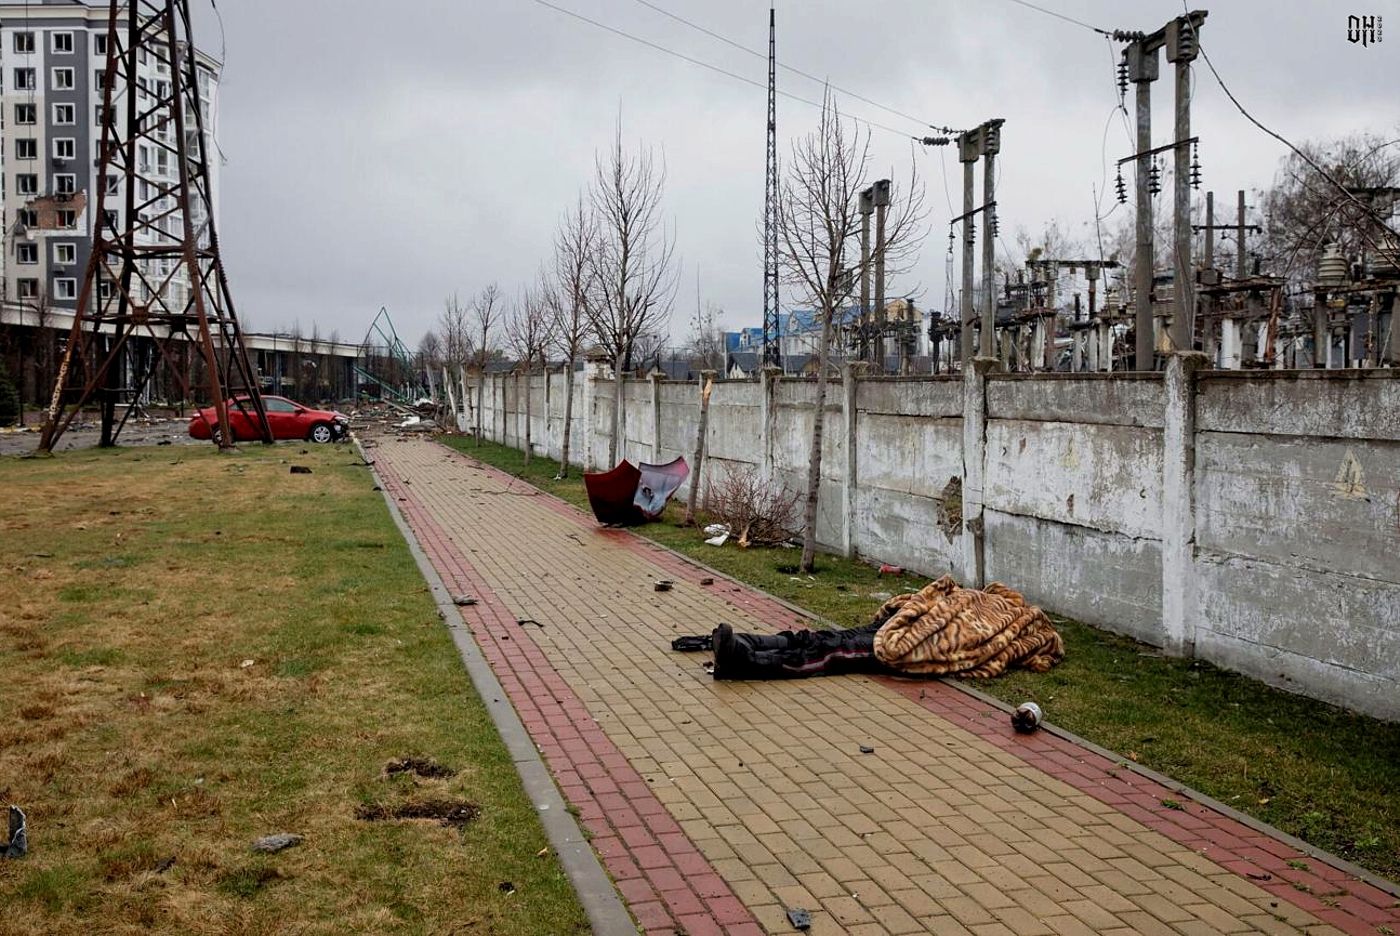 DH - Bucha destruction and massacre under Russian occupation 19 - Feb-Apr 2022 - Bucha Ukraine.jpg